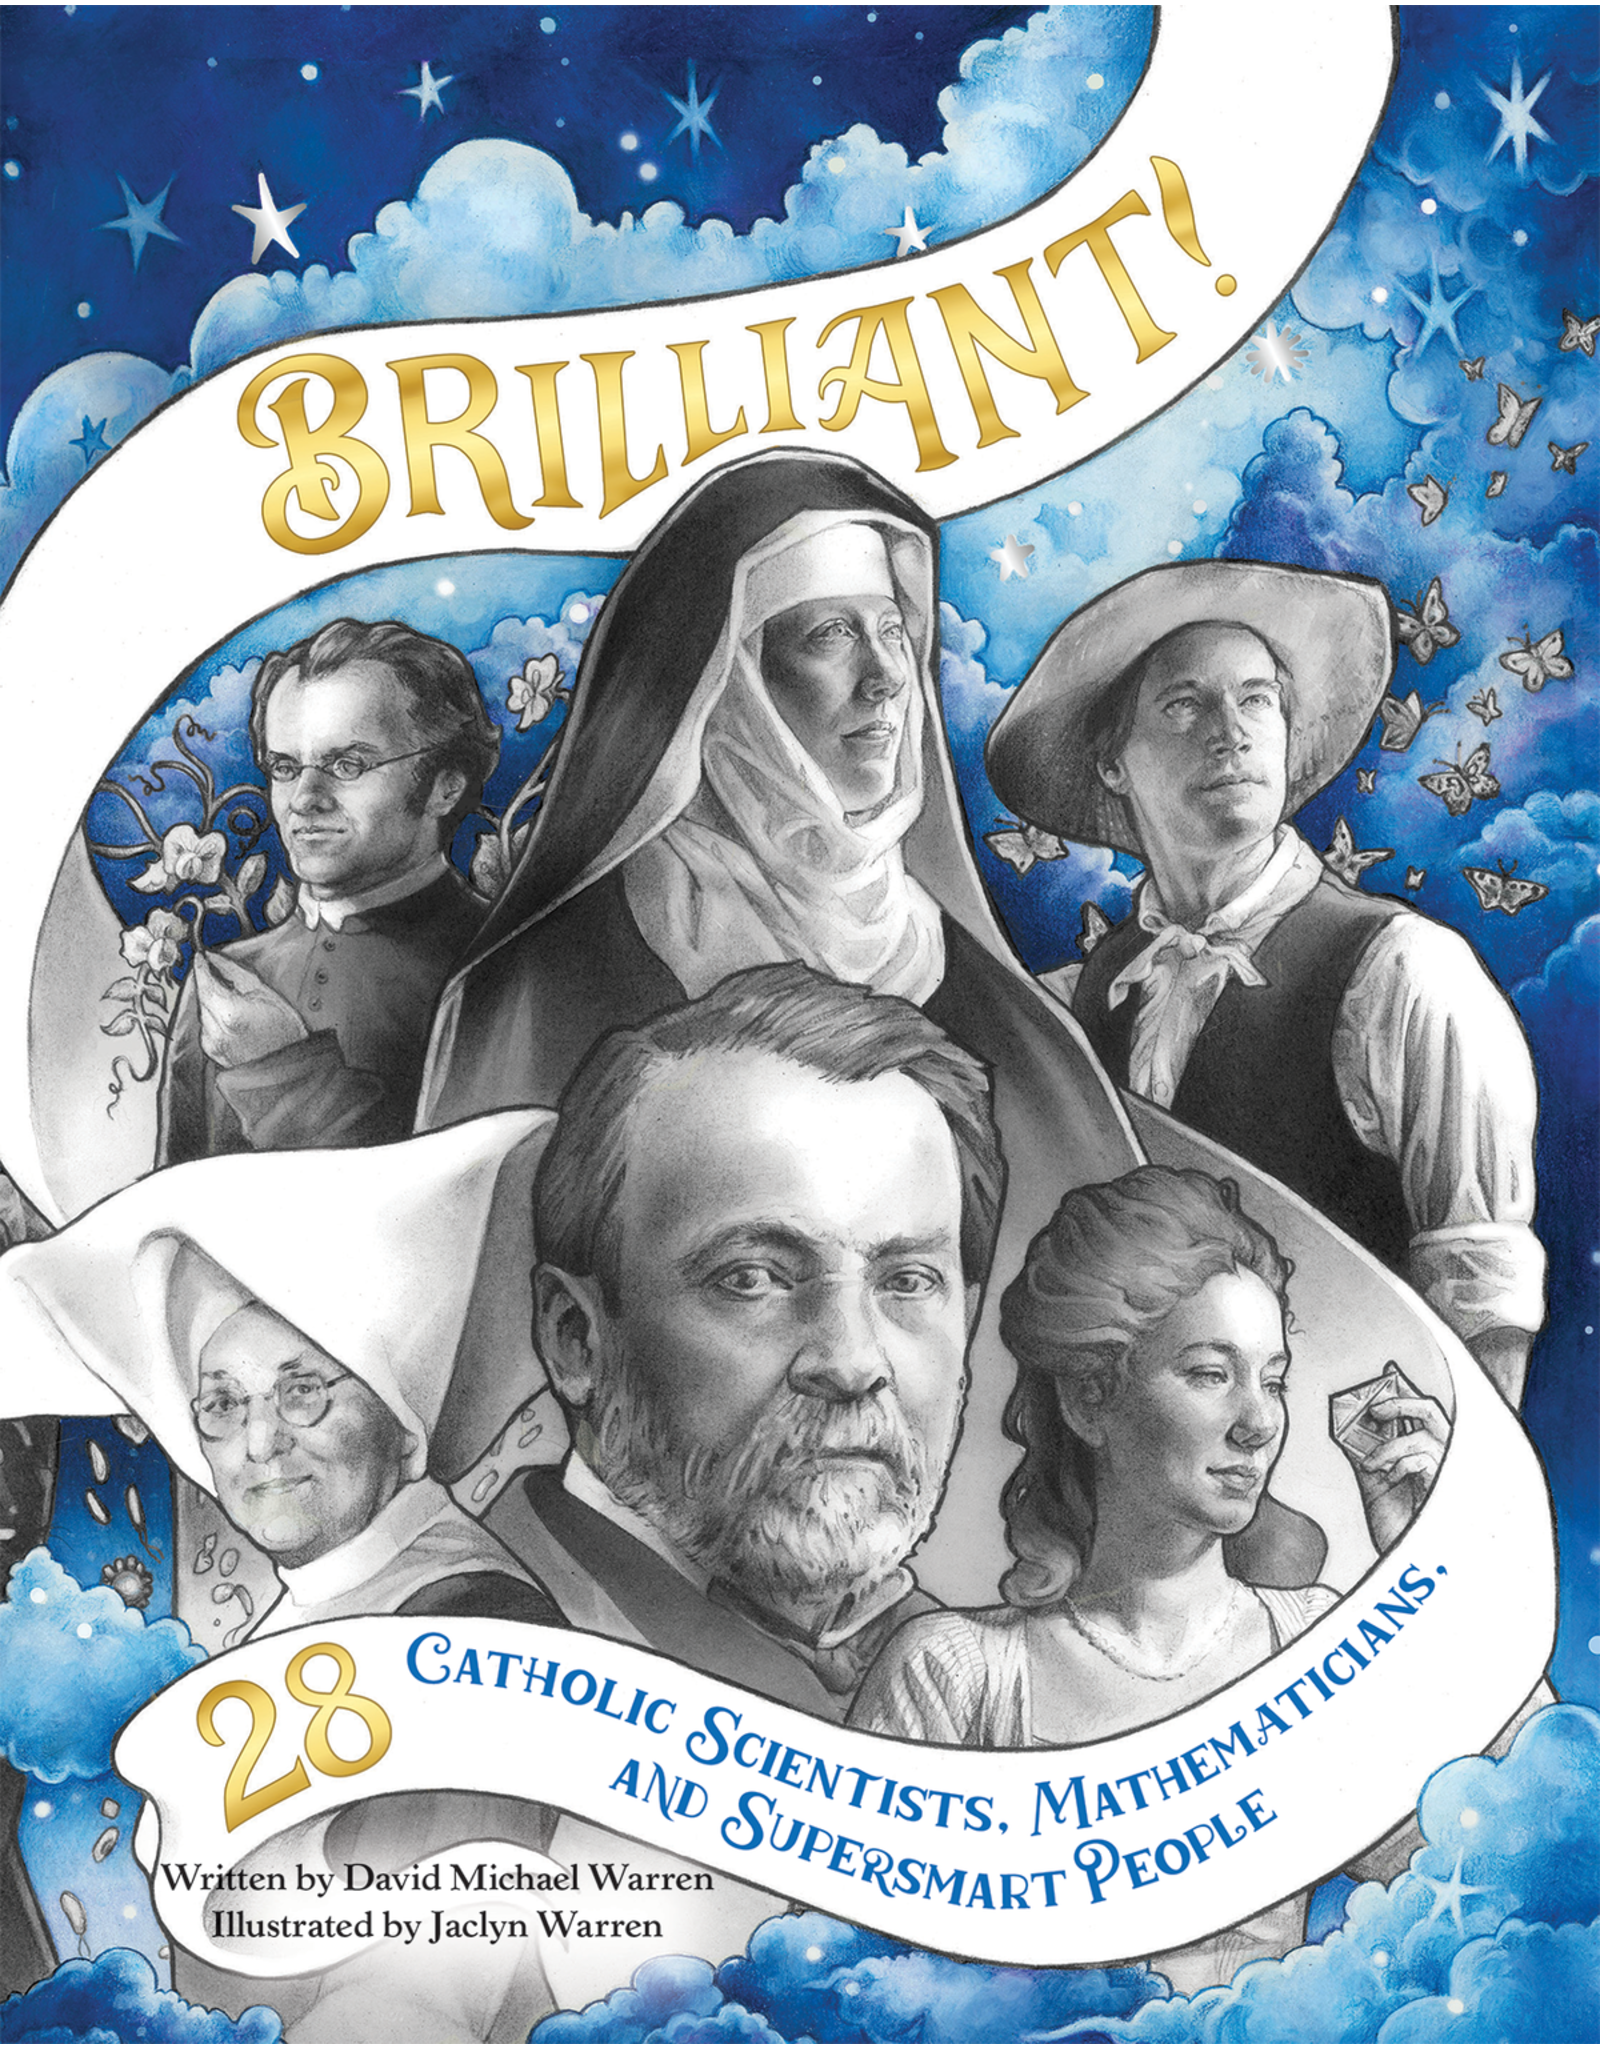 Pauline Books Brilliant! 28 Catholic Scientists, Mathematicians, and Supersmart People